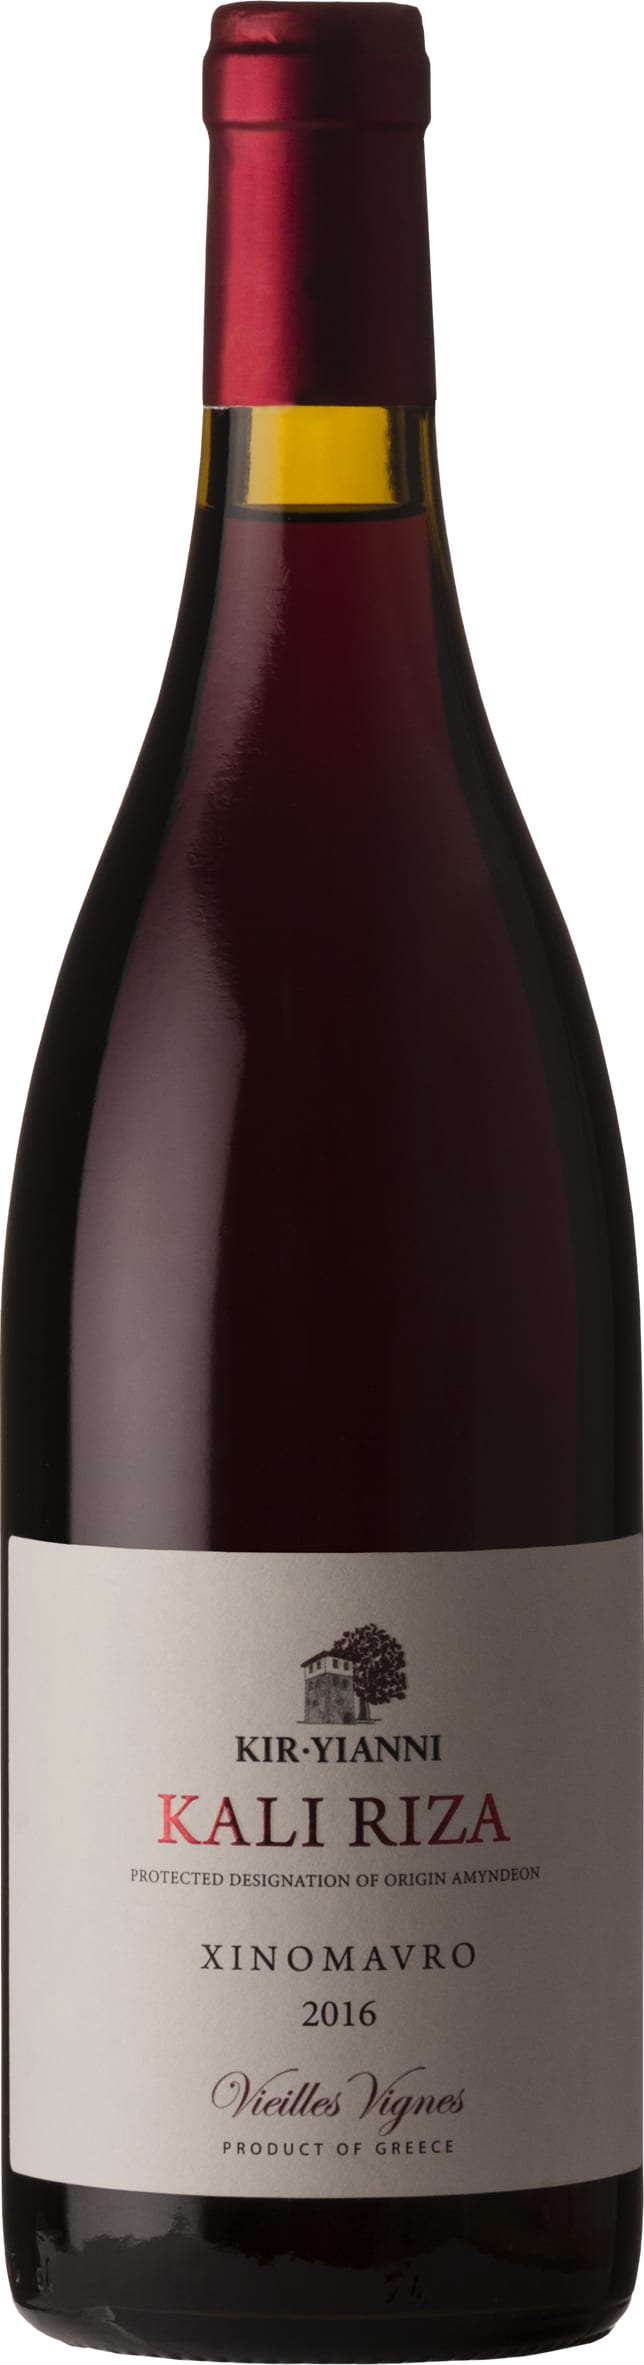 Kir-Yianni Kali Riza 2020 75cl - Buy Kir-Yianni Wines from GREAT WINES DIRECT wine shop